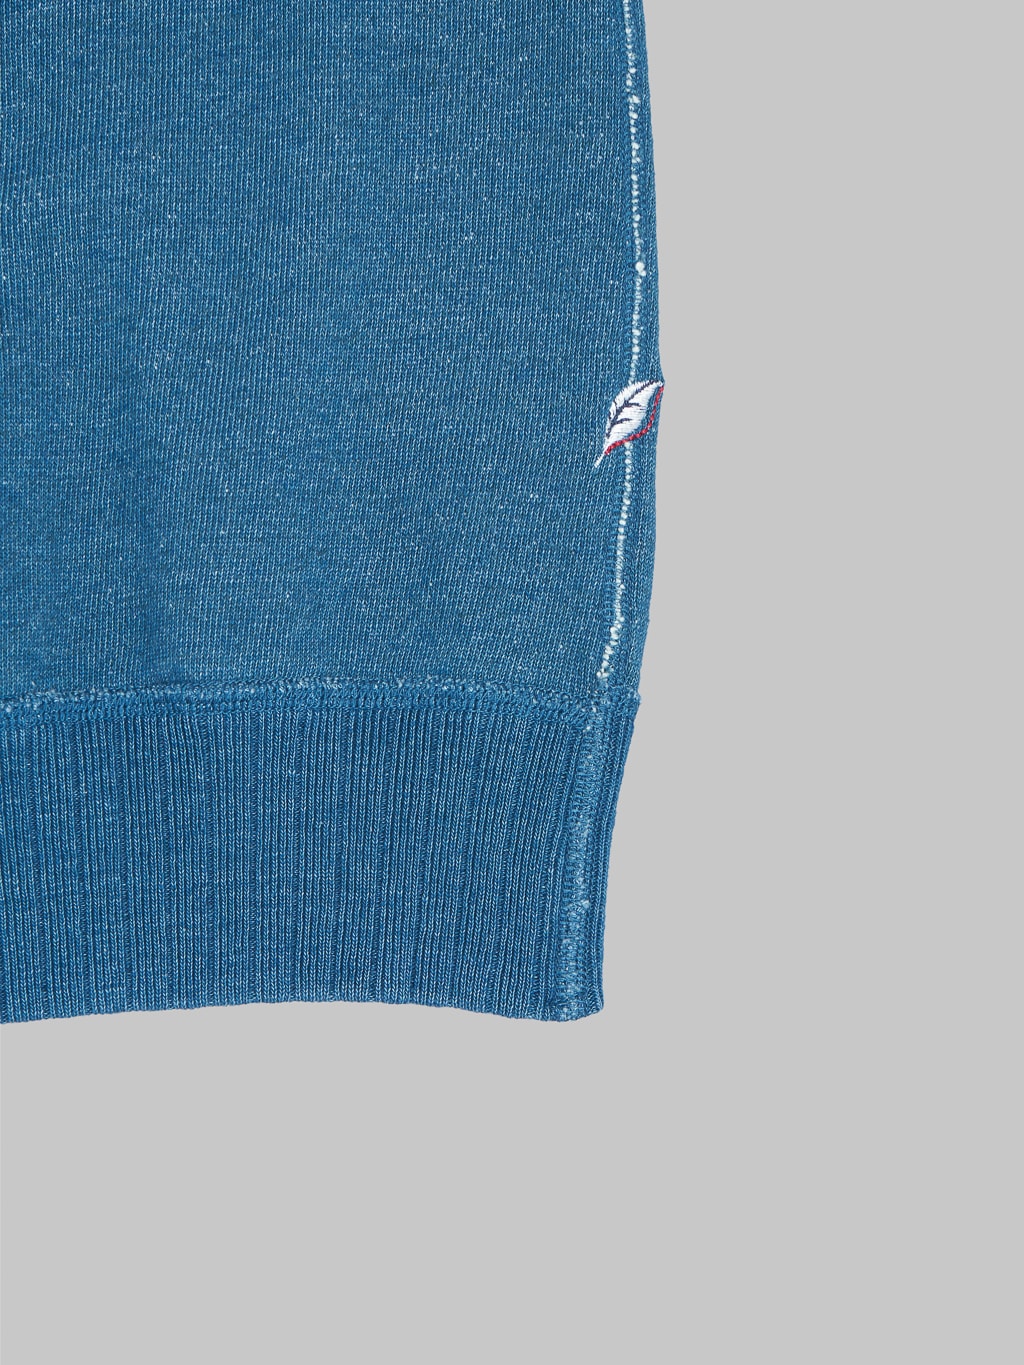 Pure Blue Japan Slub Yarn Sweatshirt Greencast Indigo hem closeup